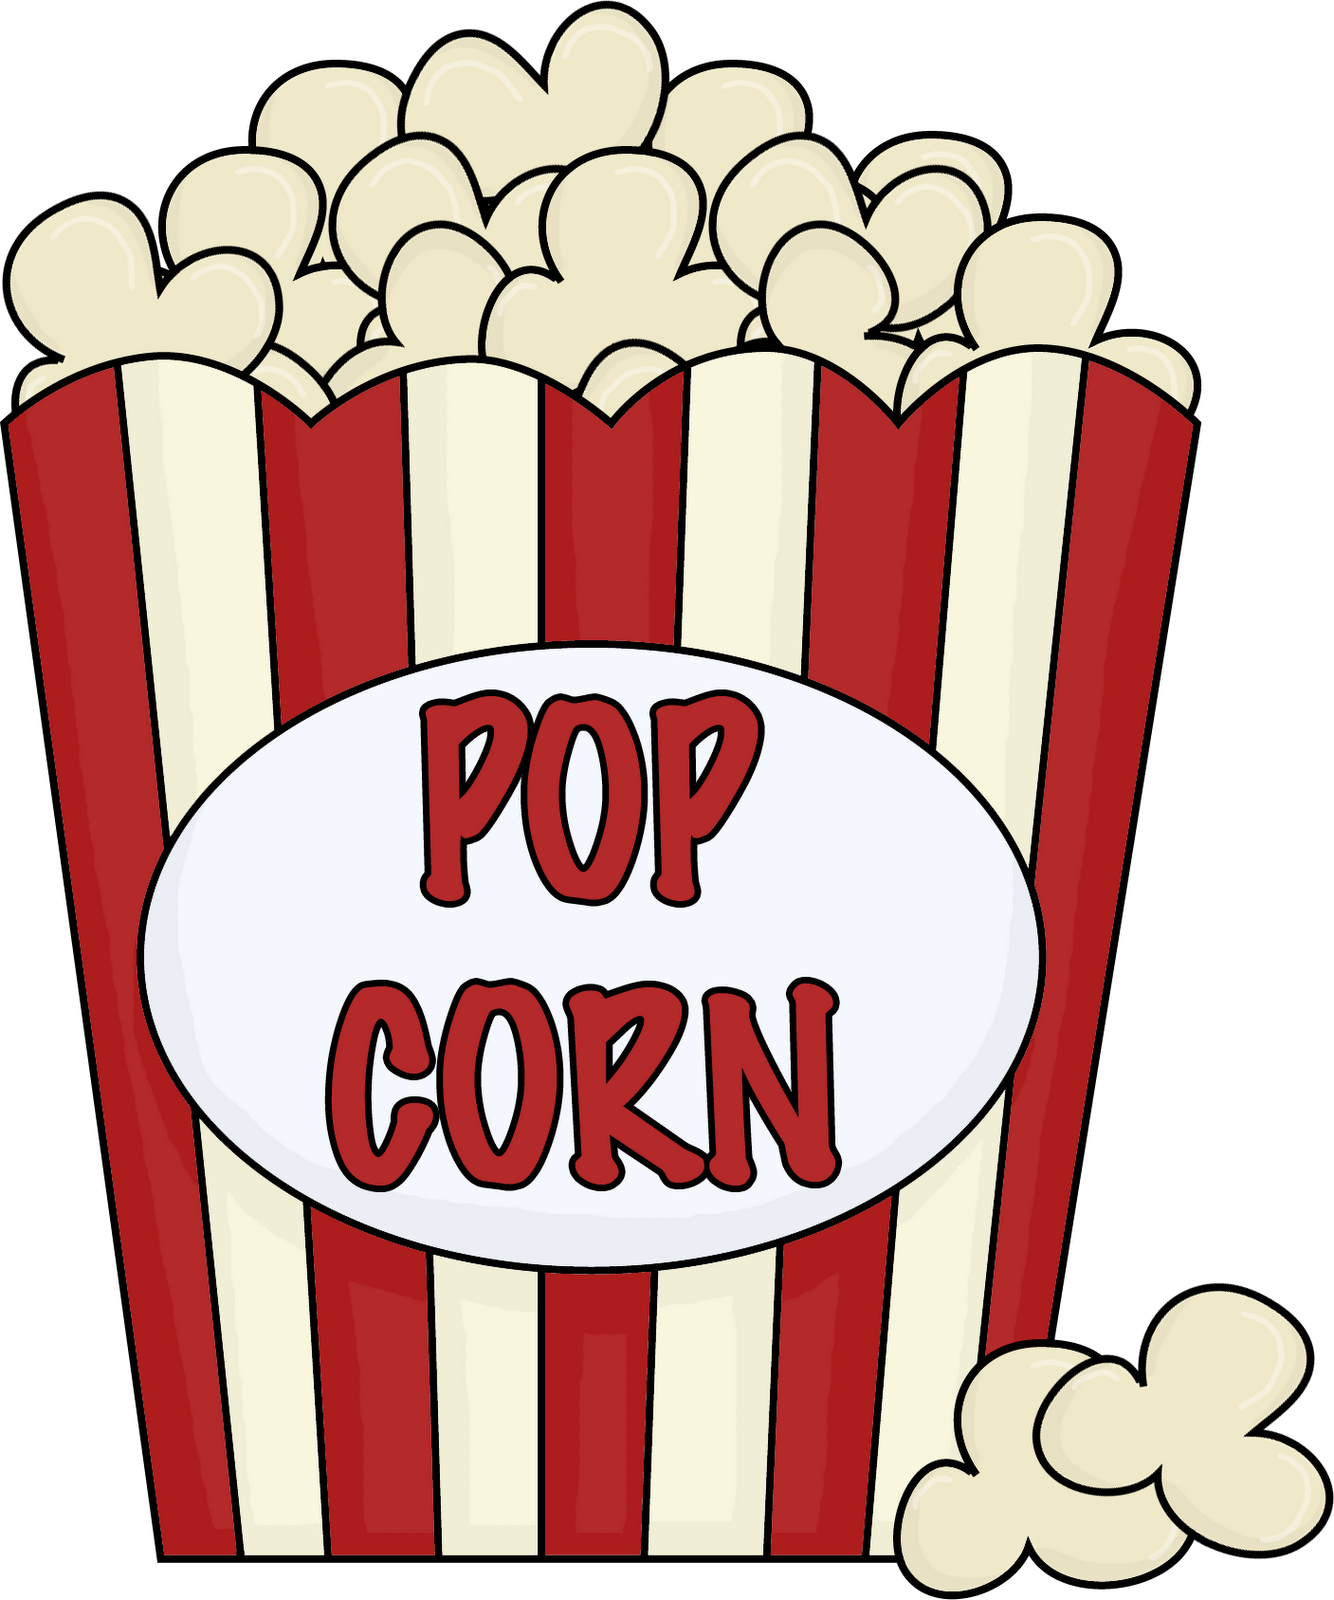 Popcorn kernel clipart transparent background clipartfest